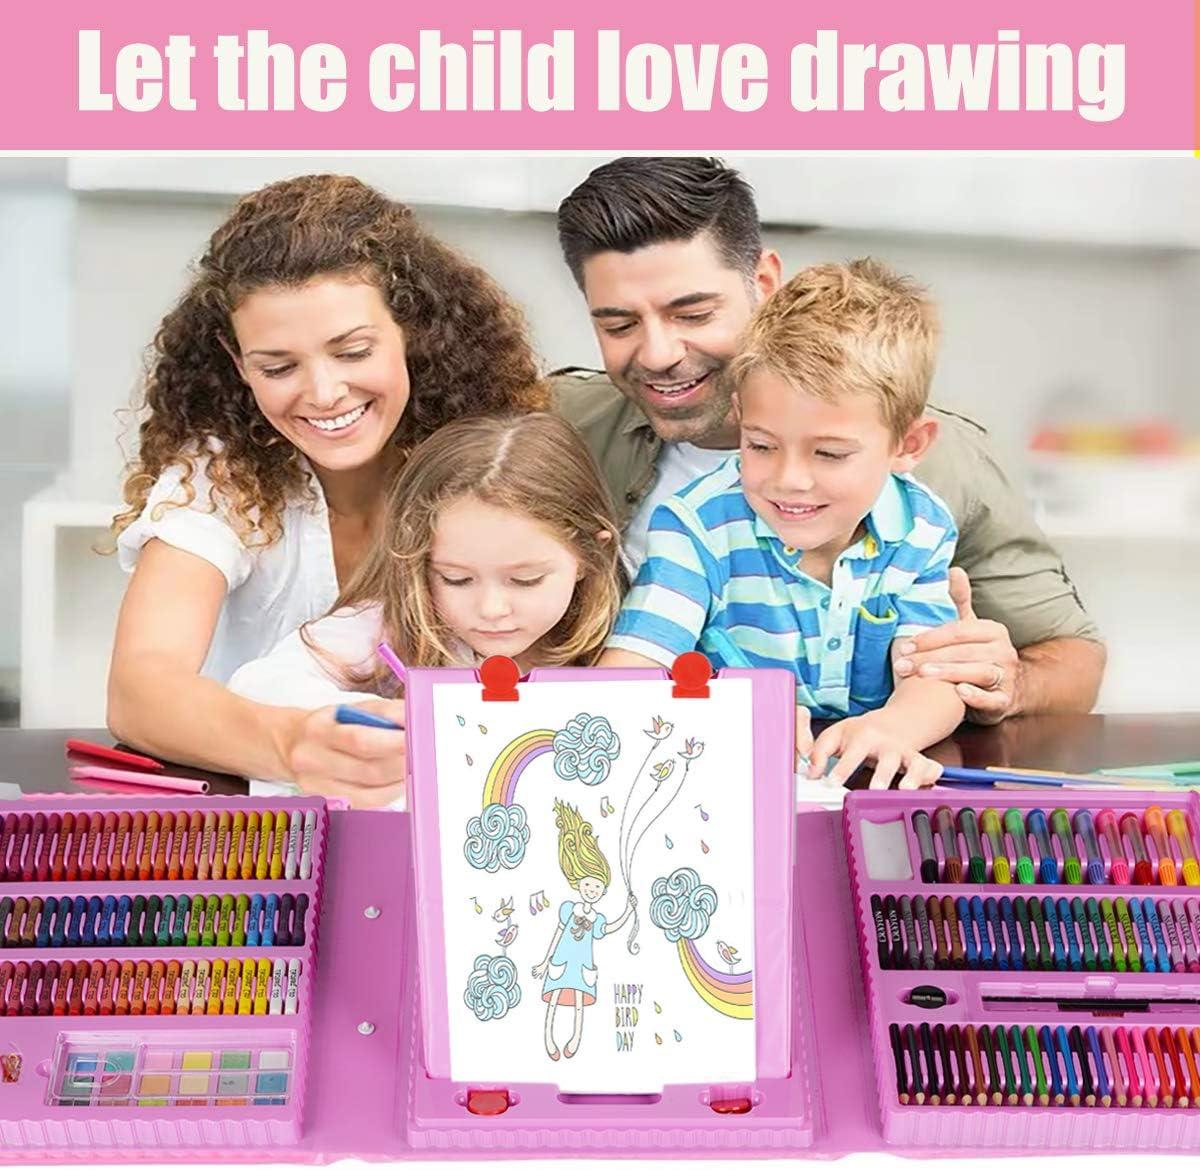 208 Pcs Art Set Kids Childrens Colouring Drawing Painting Arts & Crafts  Case UK